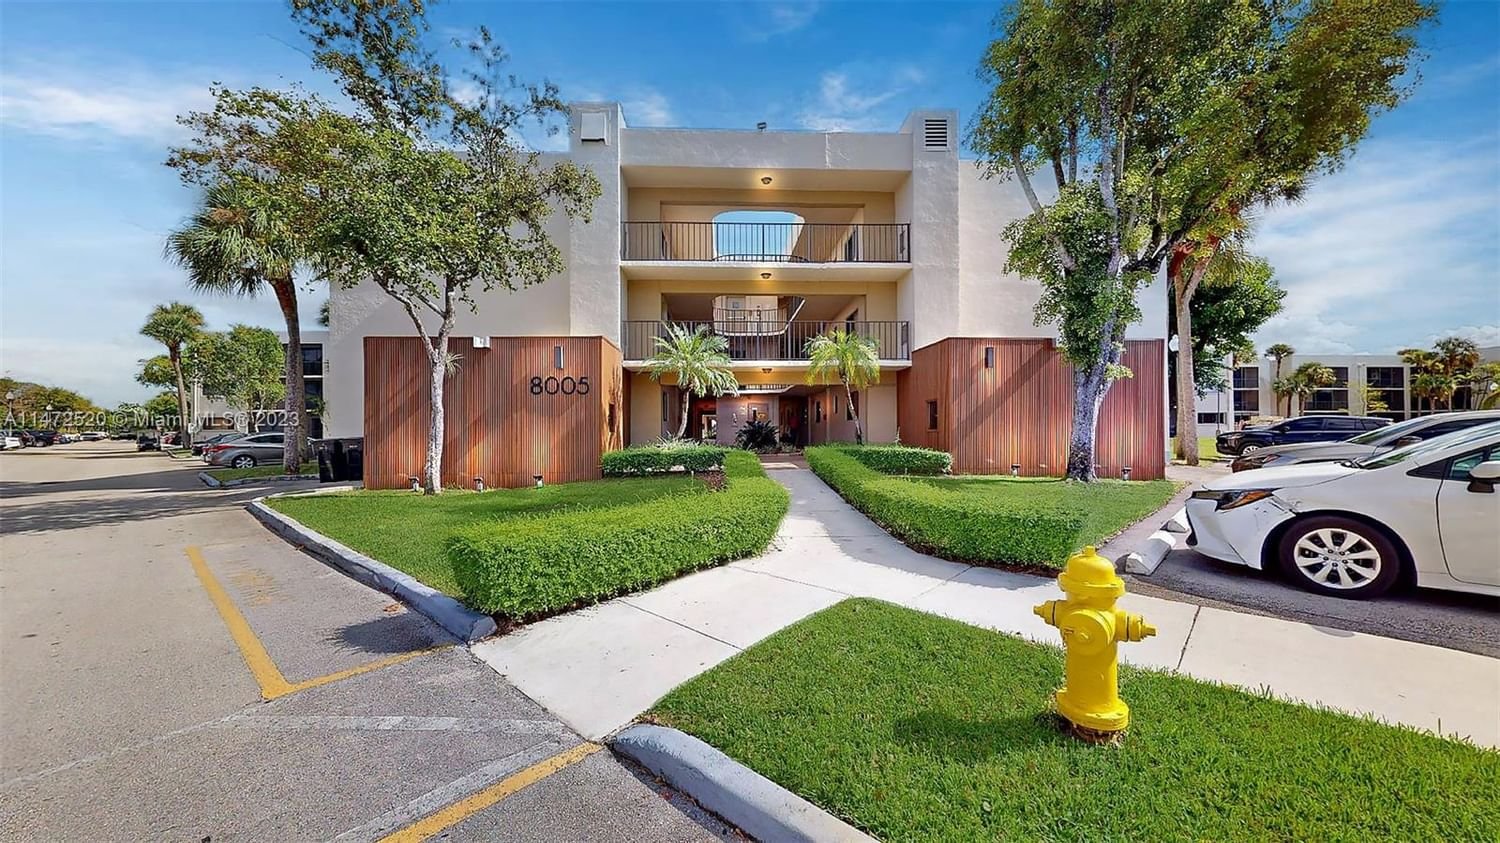 Real estate property located at 8005 107th Ave #124, Miami-Dade County, Miami, FL